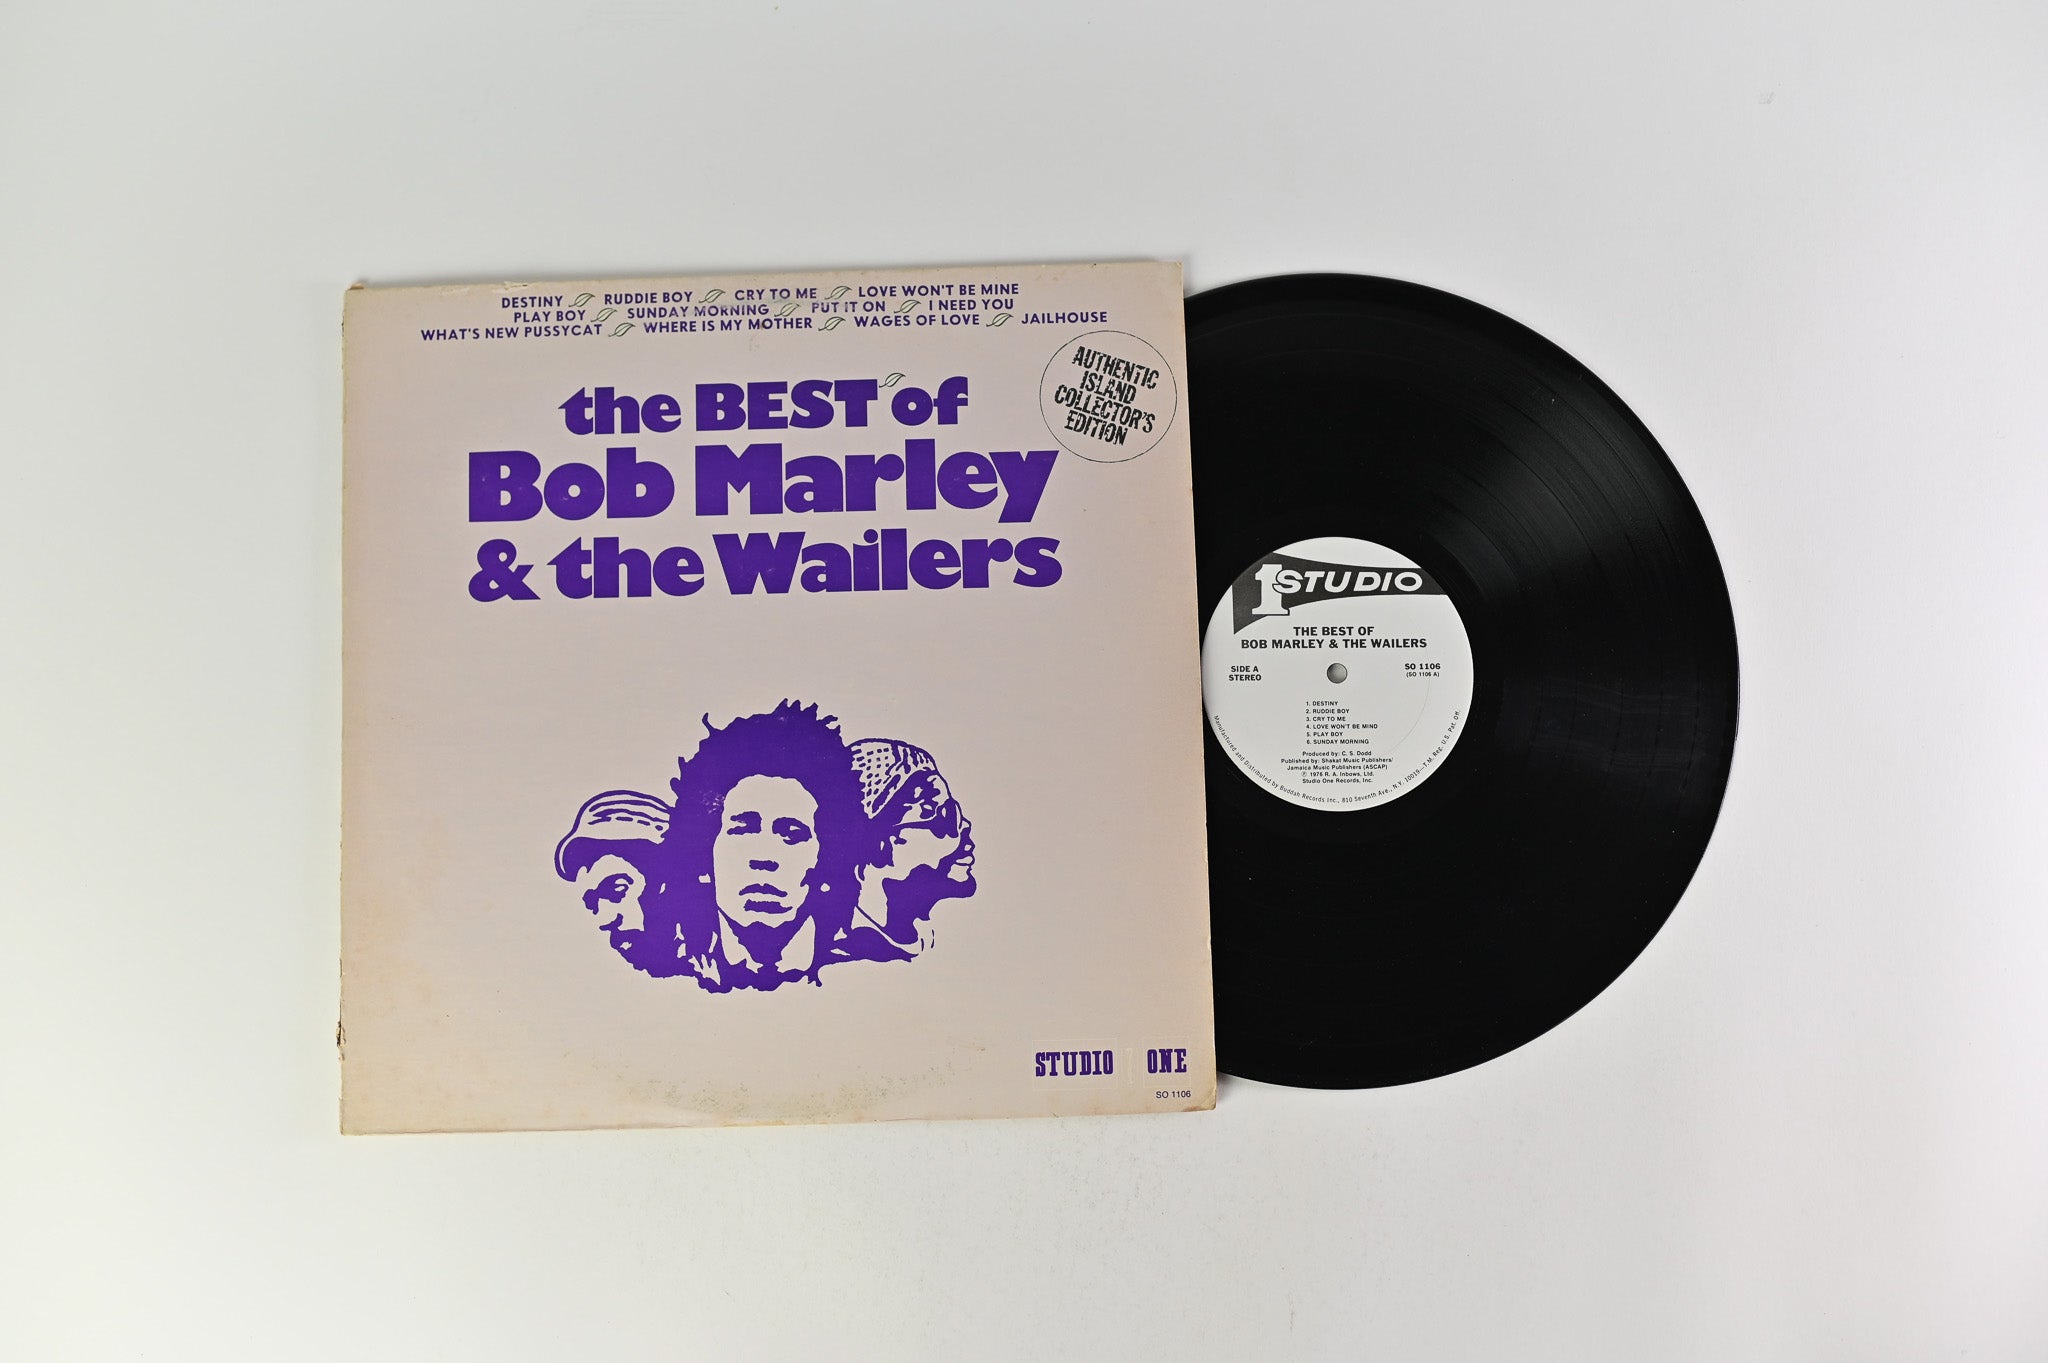 Bob Marley & The Wailers - The Best Of Bob Marley & The Wailers on Studio One Buddah